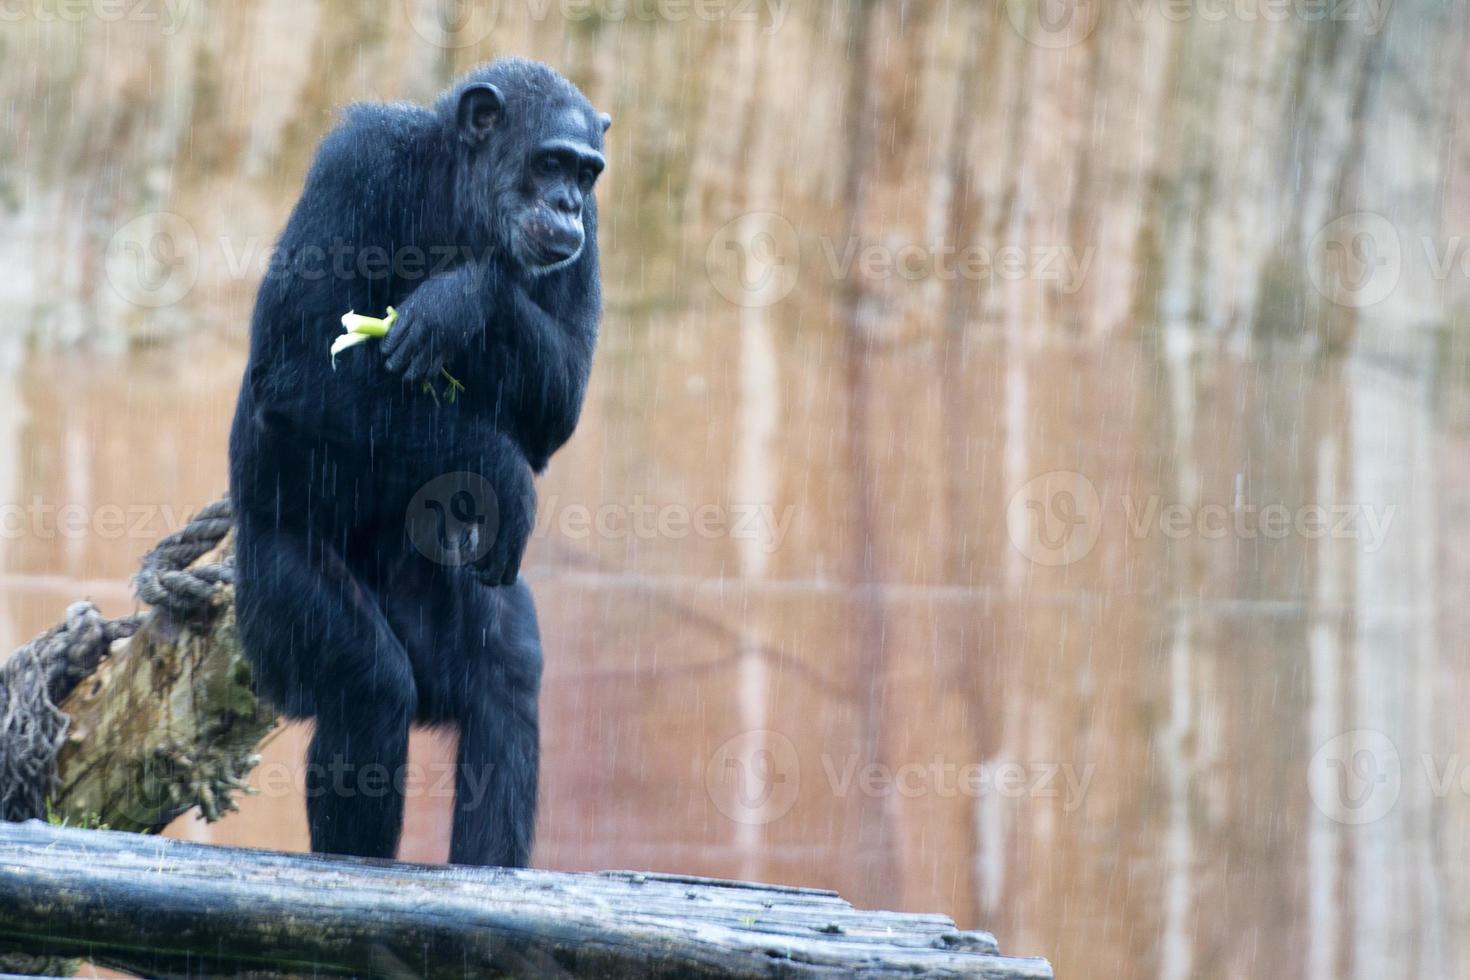 Ape chimpanzee monkey photo